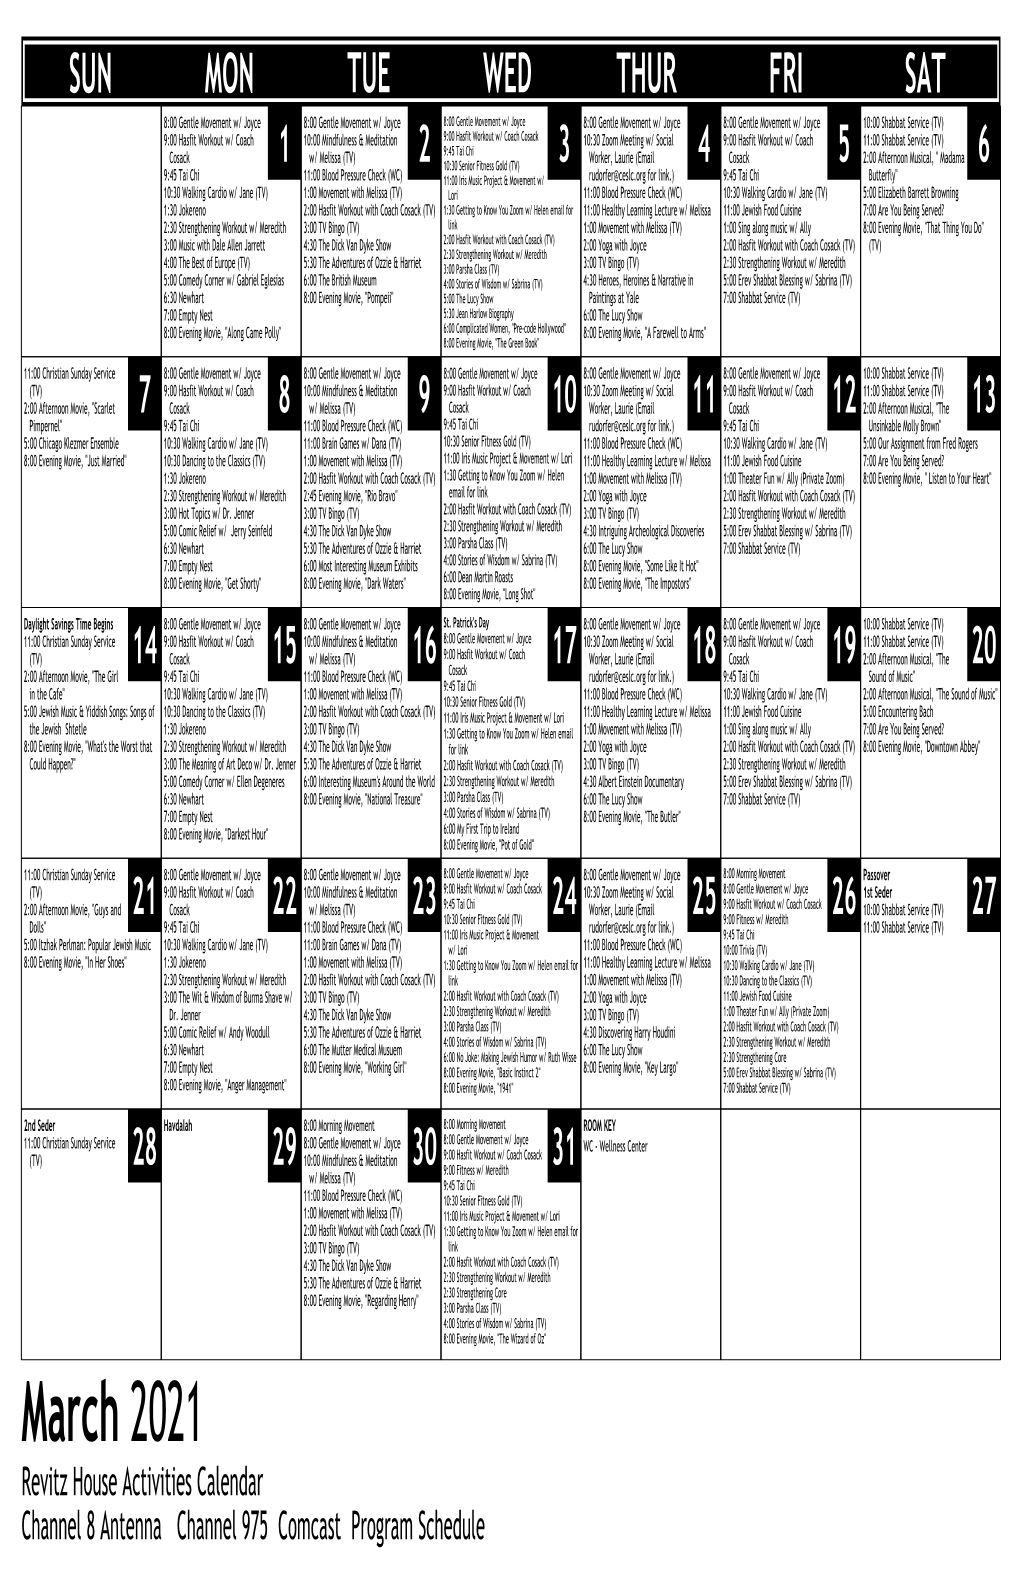 March 2021 Revitz House Activities Calendar Channel 8 Antenna Channel 975 Comcast Program Schedule